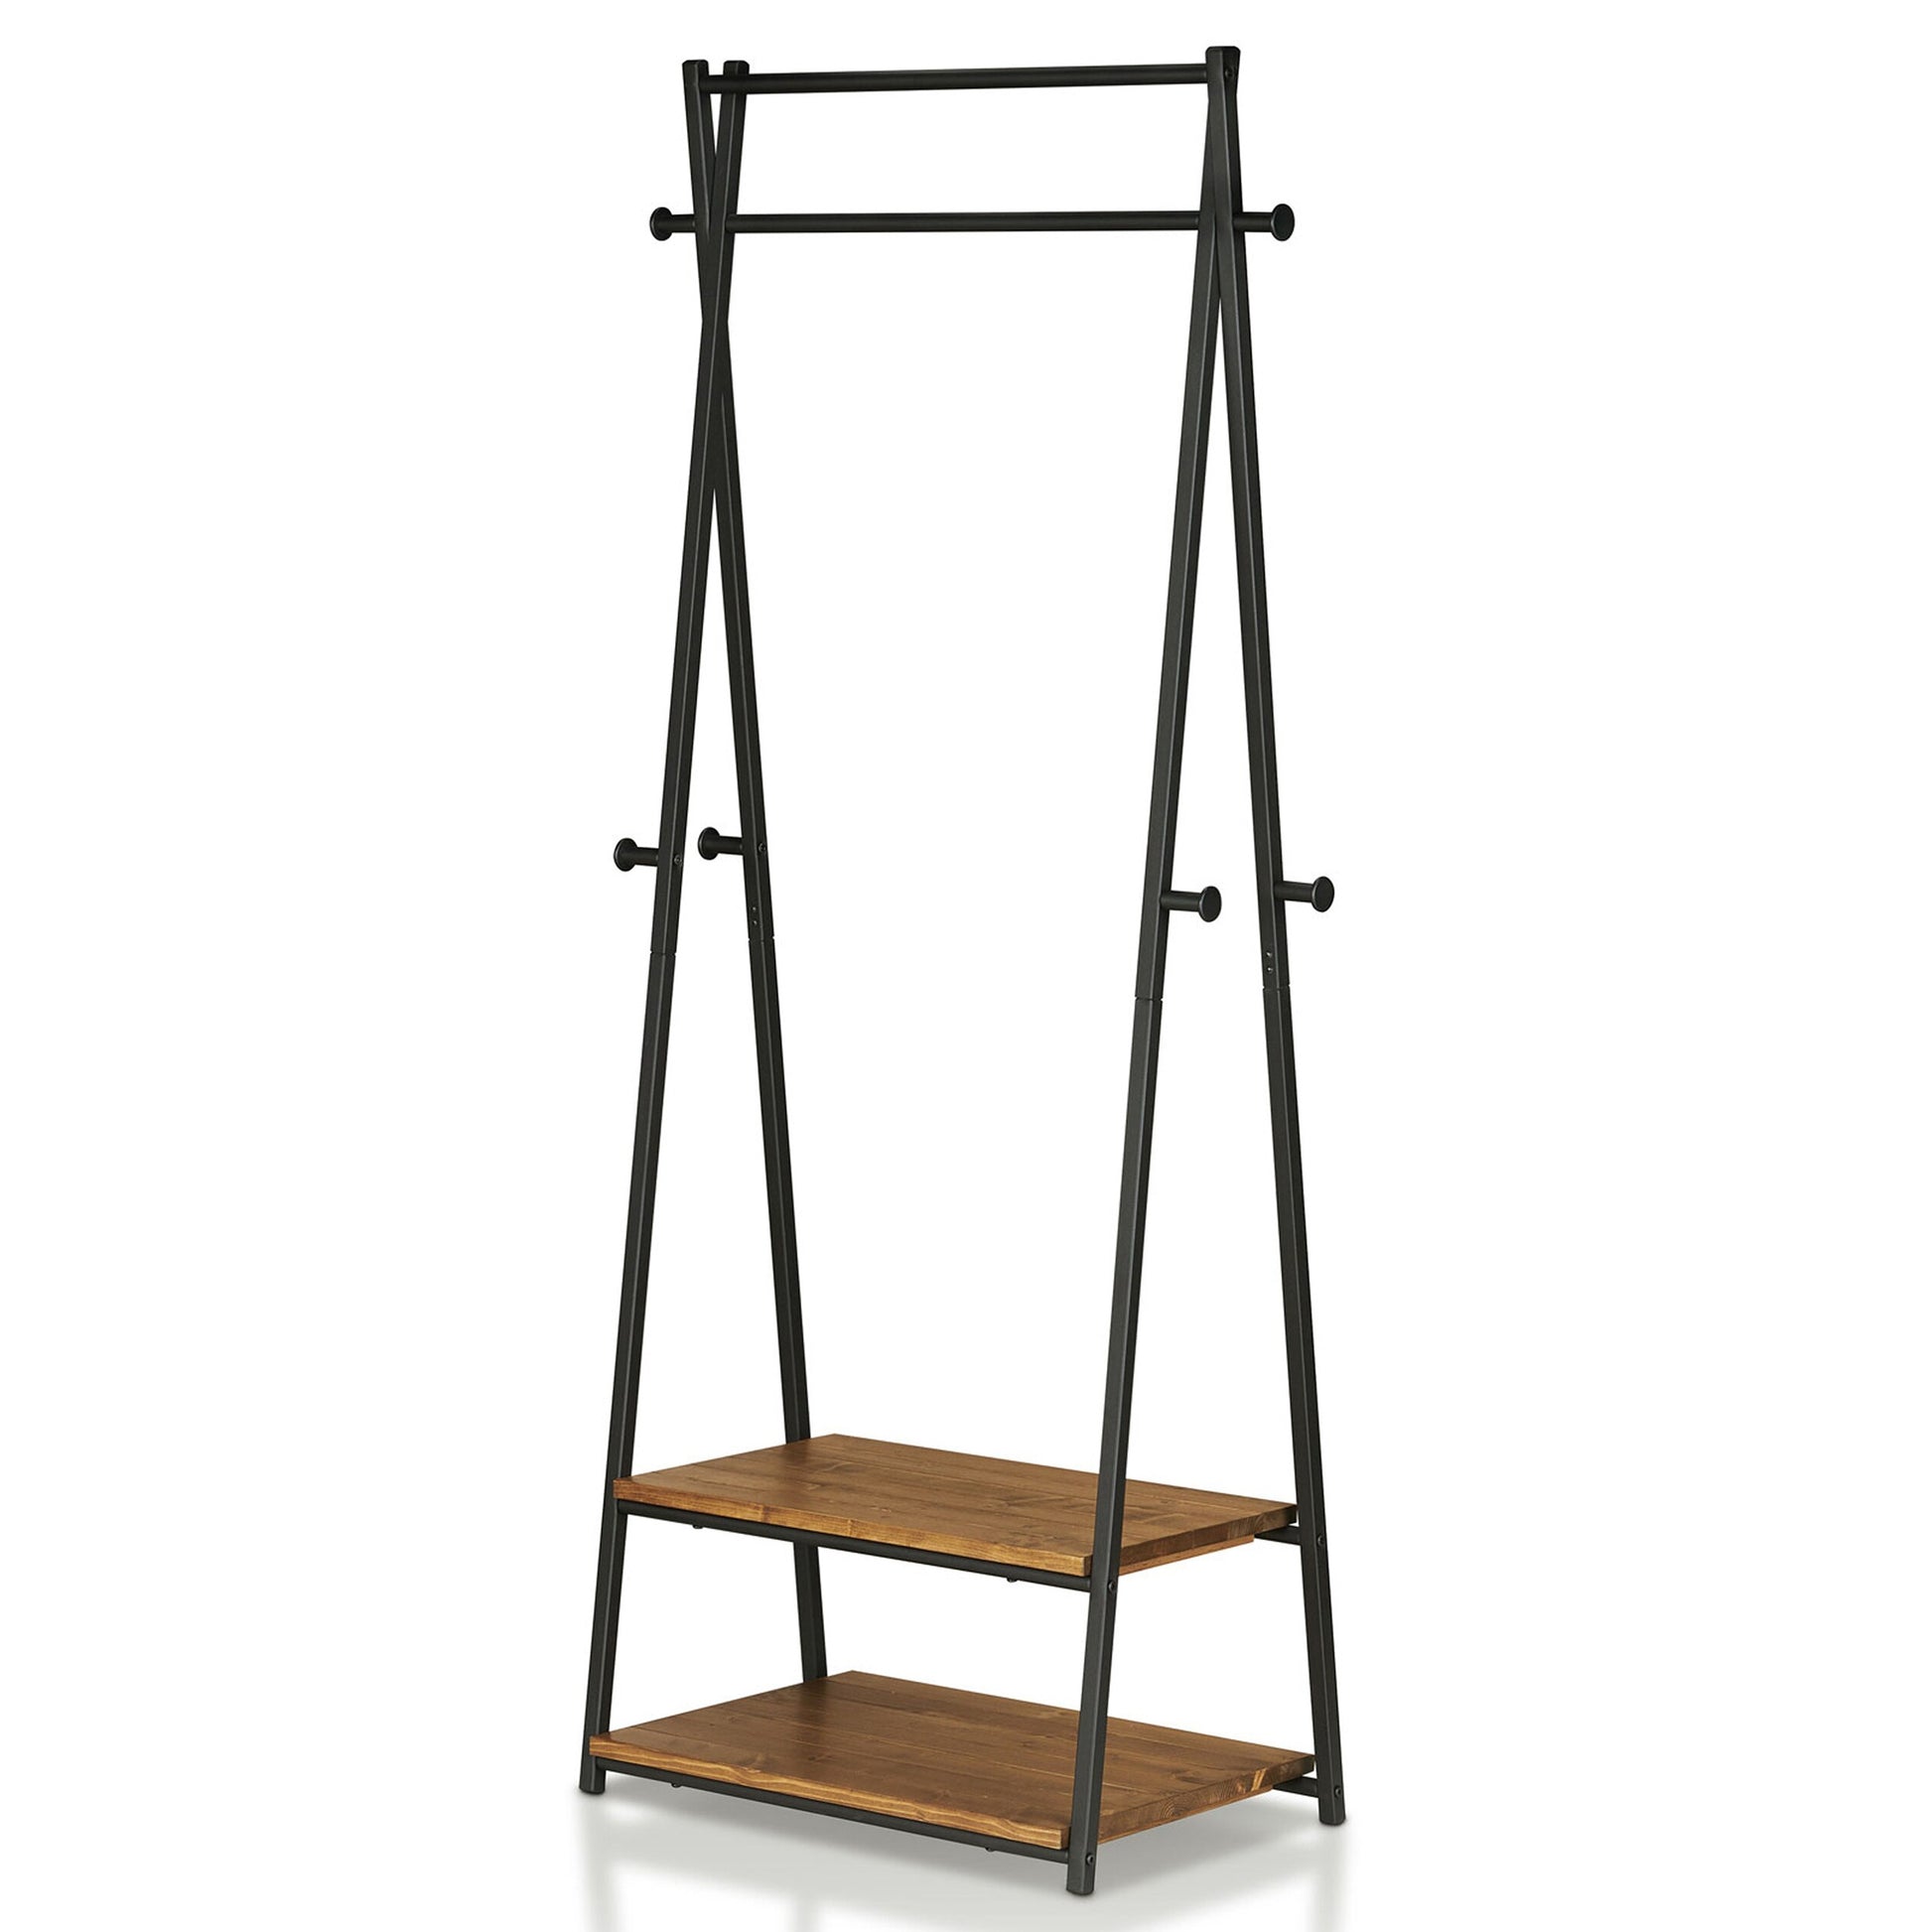 Left angled industrial warm oak and black two-shelf six-hook coat rack on a white background